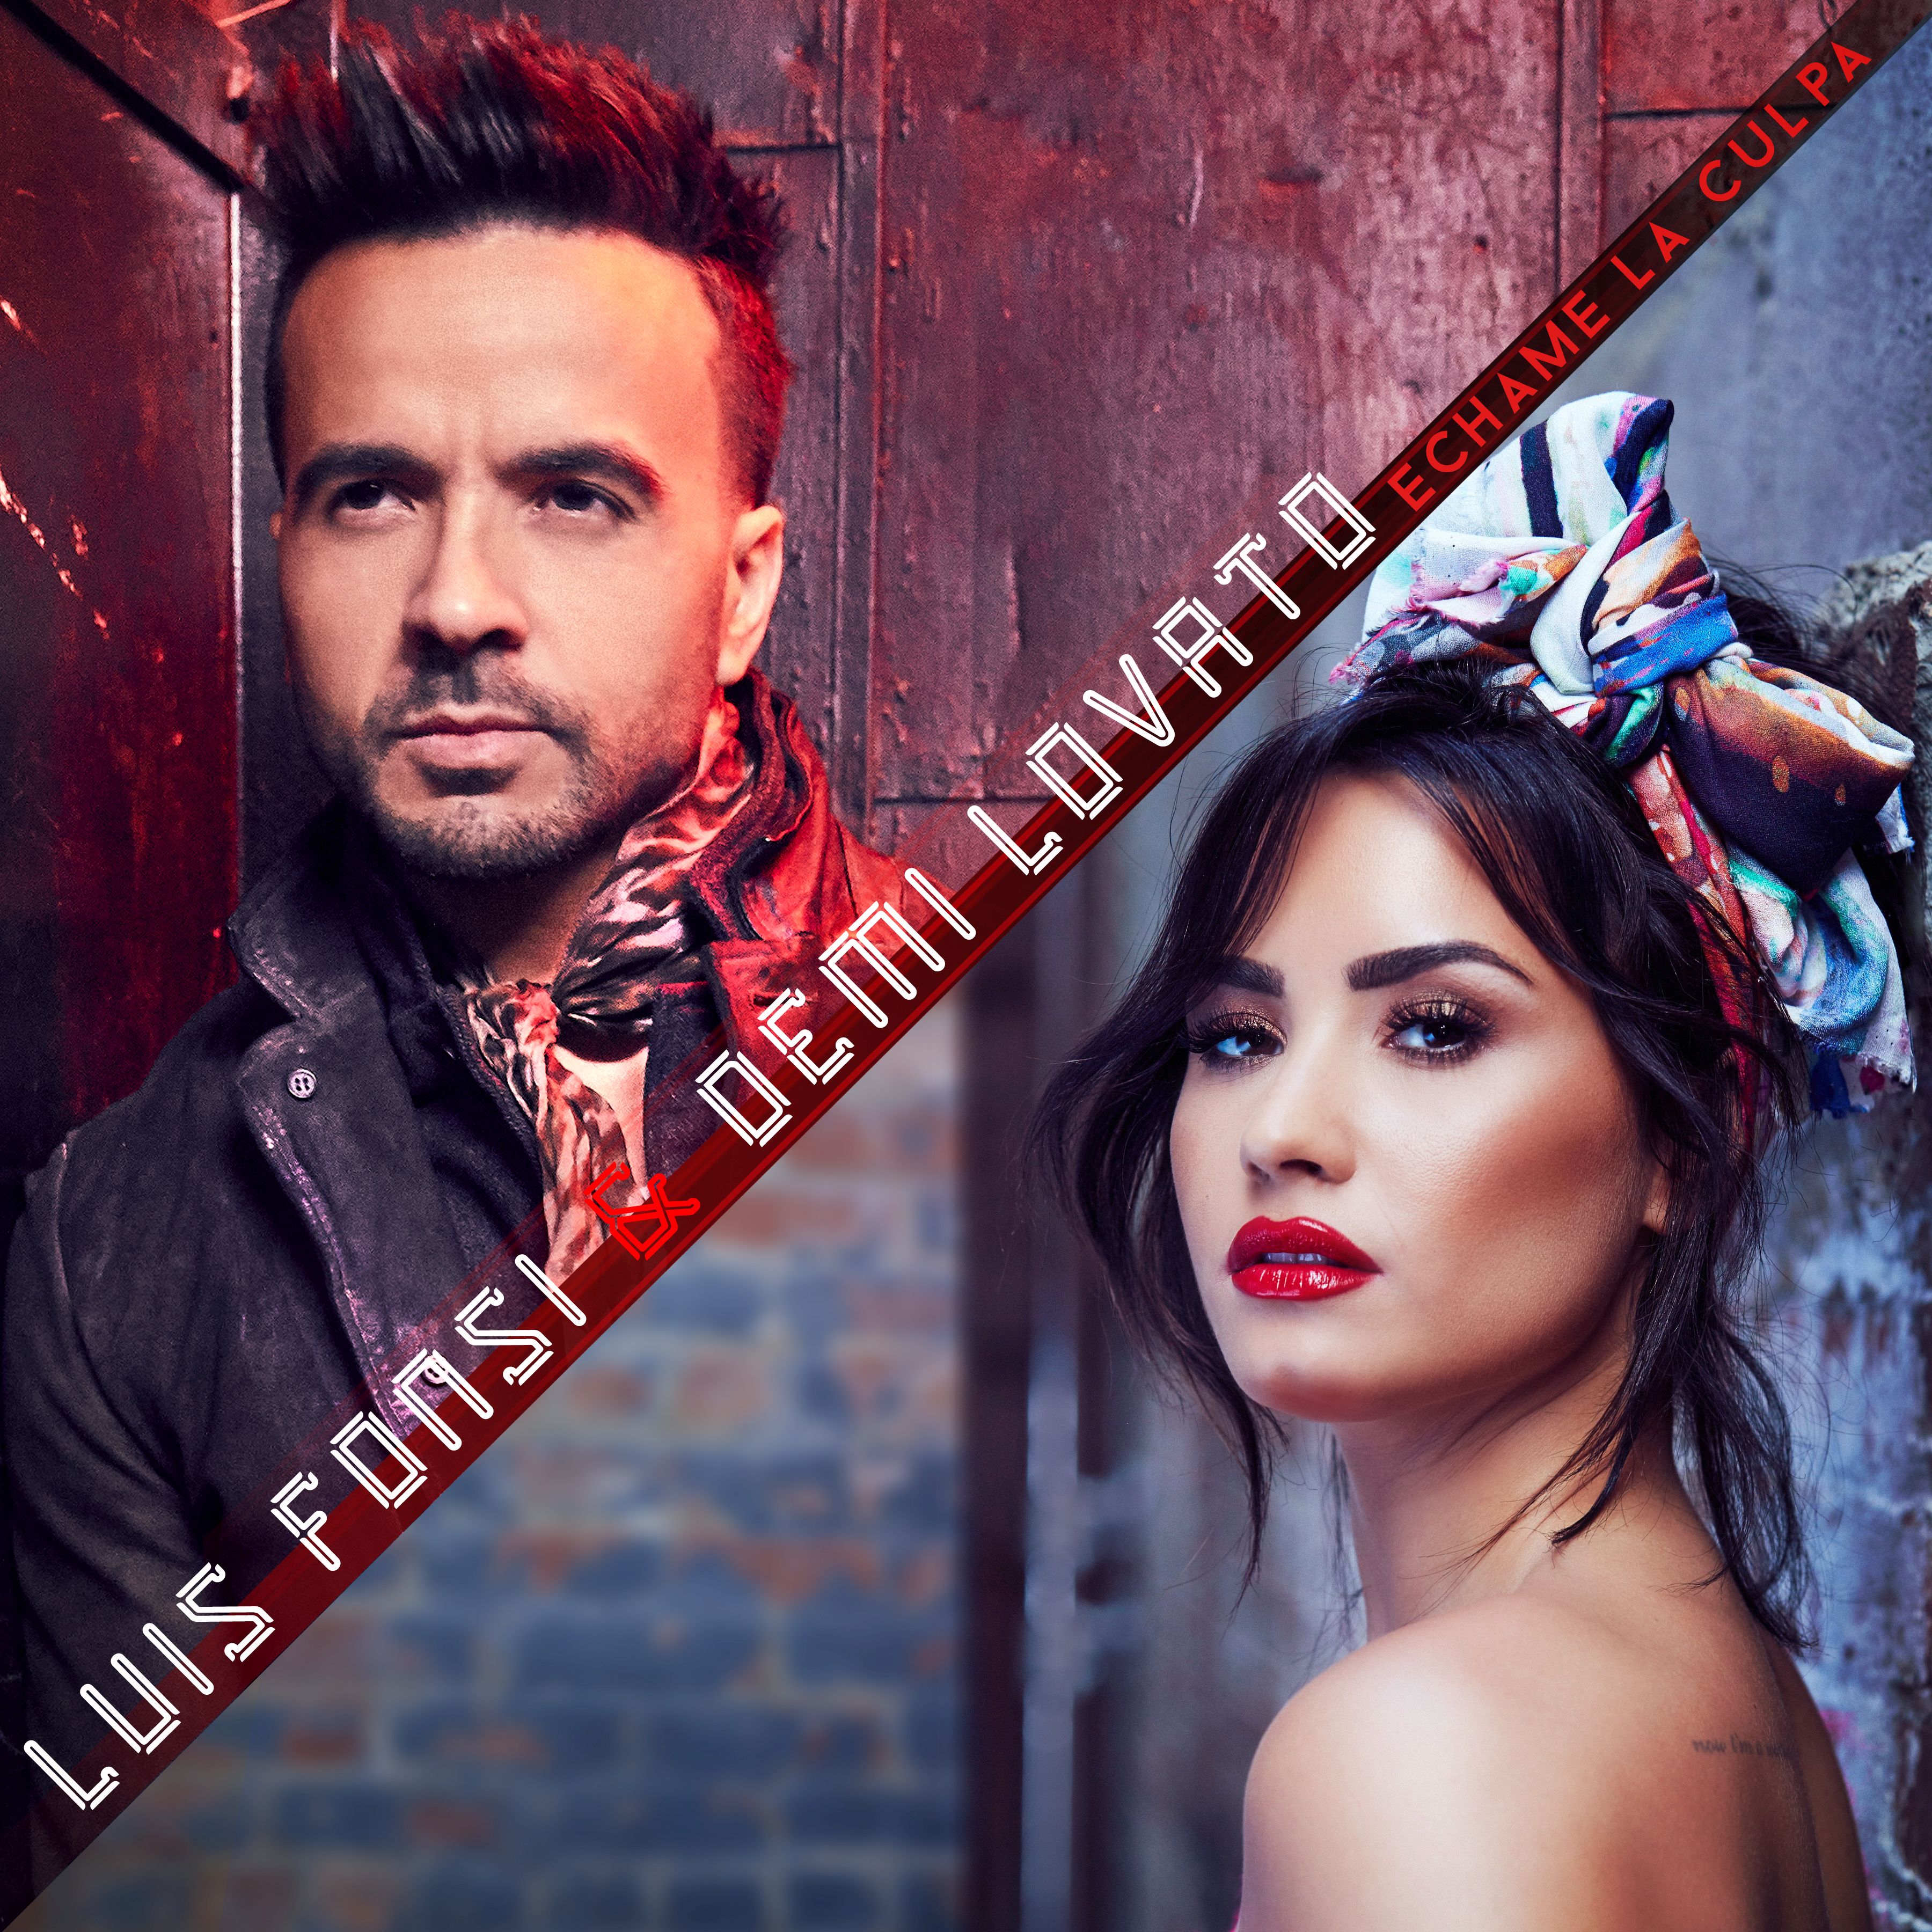 Luis Fonsi & Demi Lovato - Echame La Culpa (Not On You)